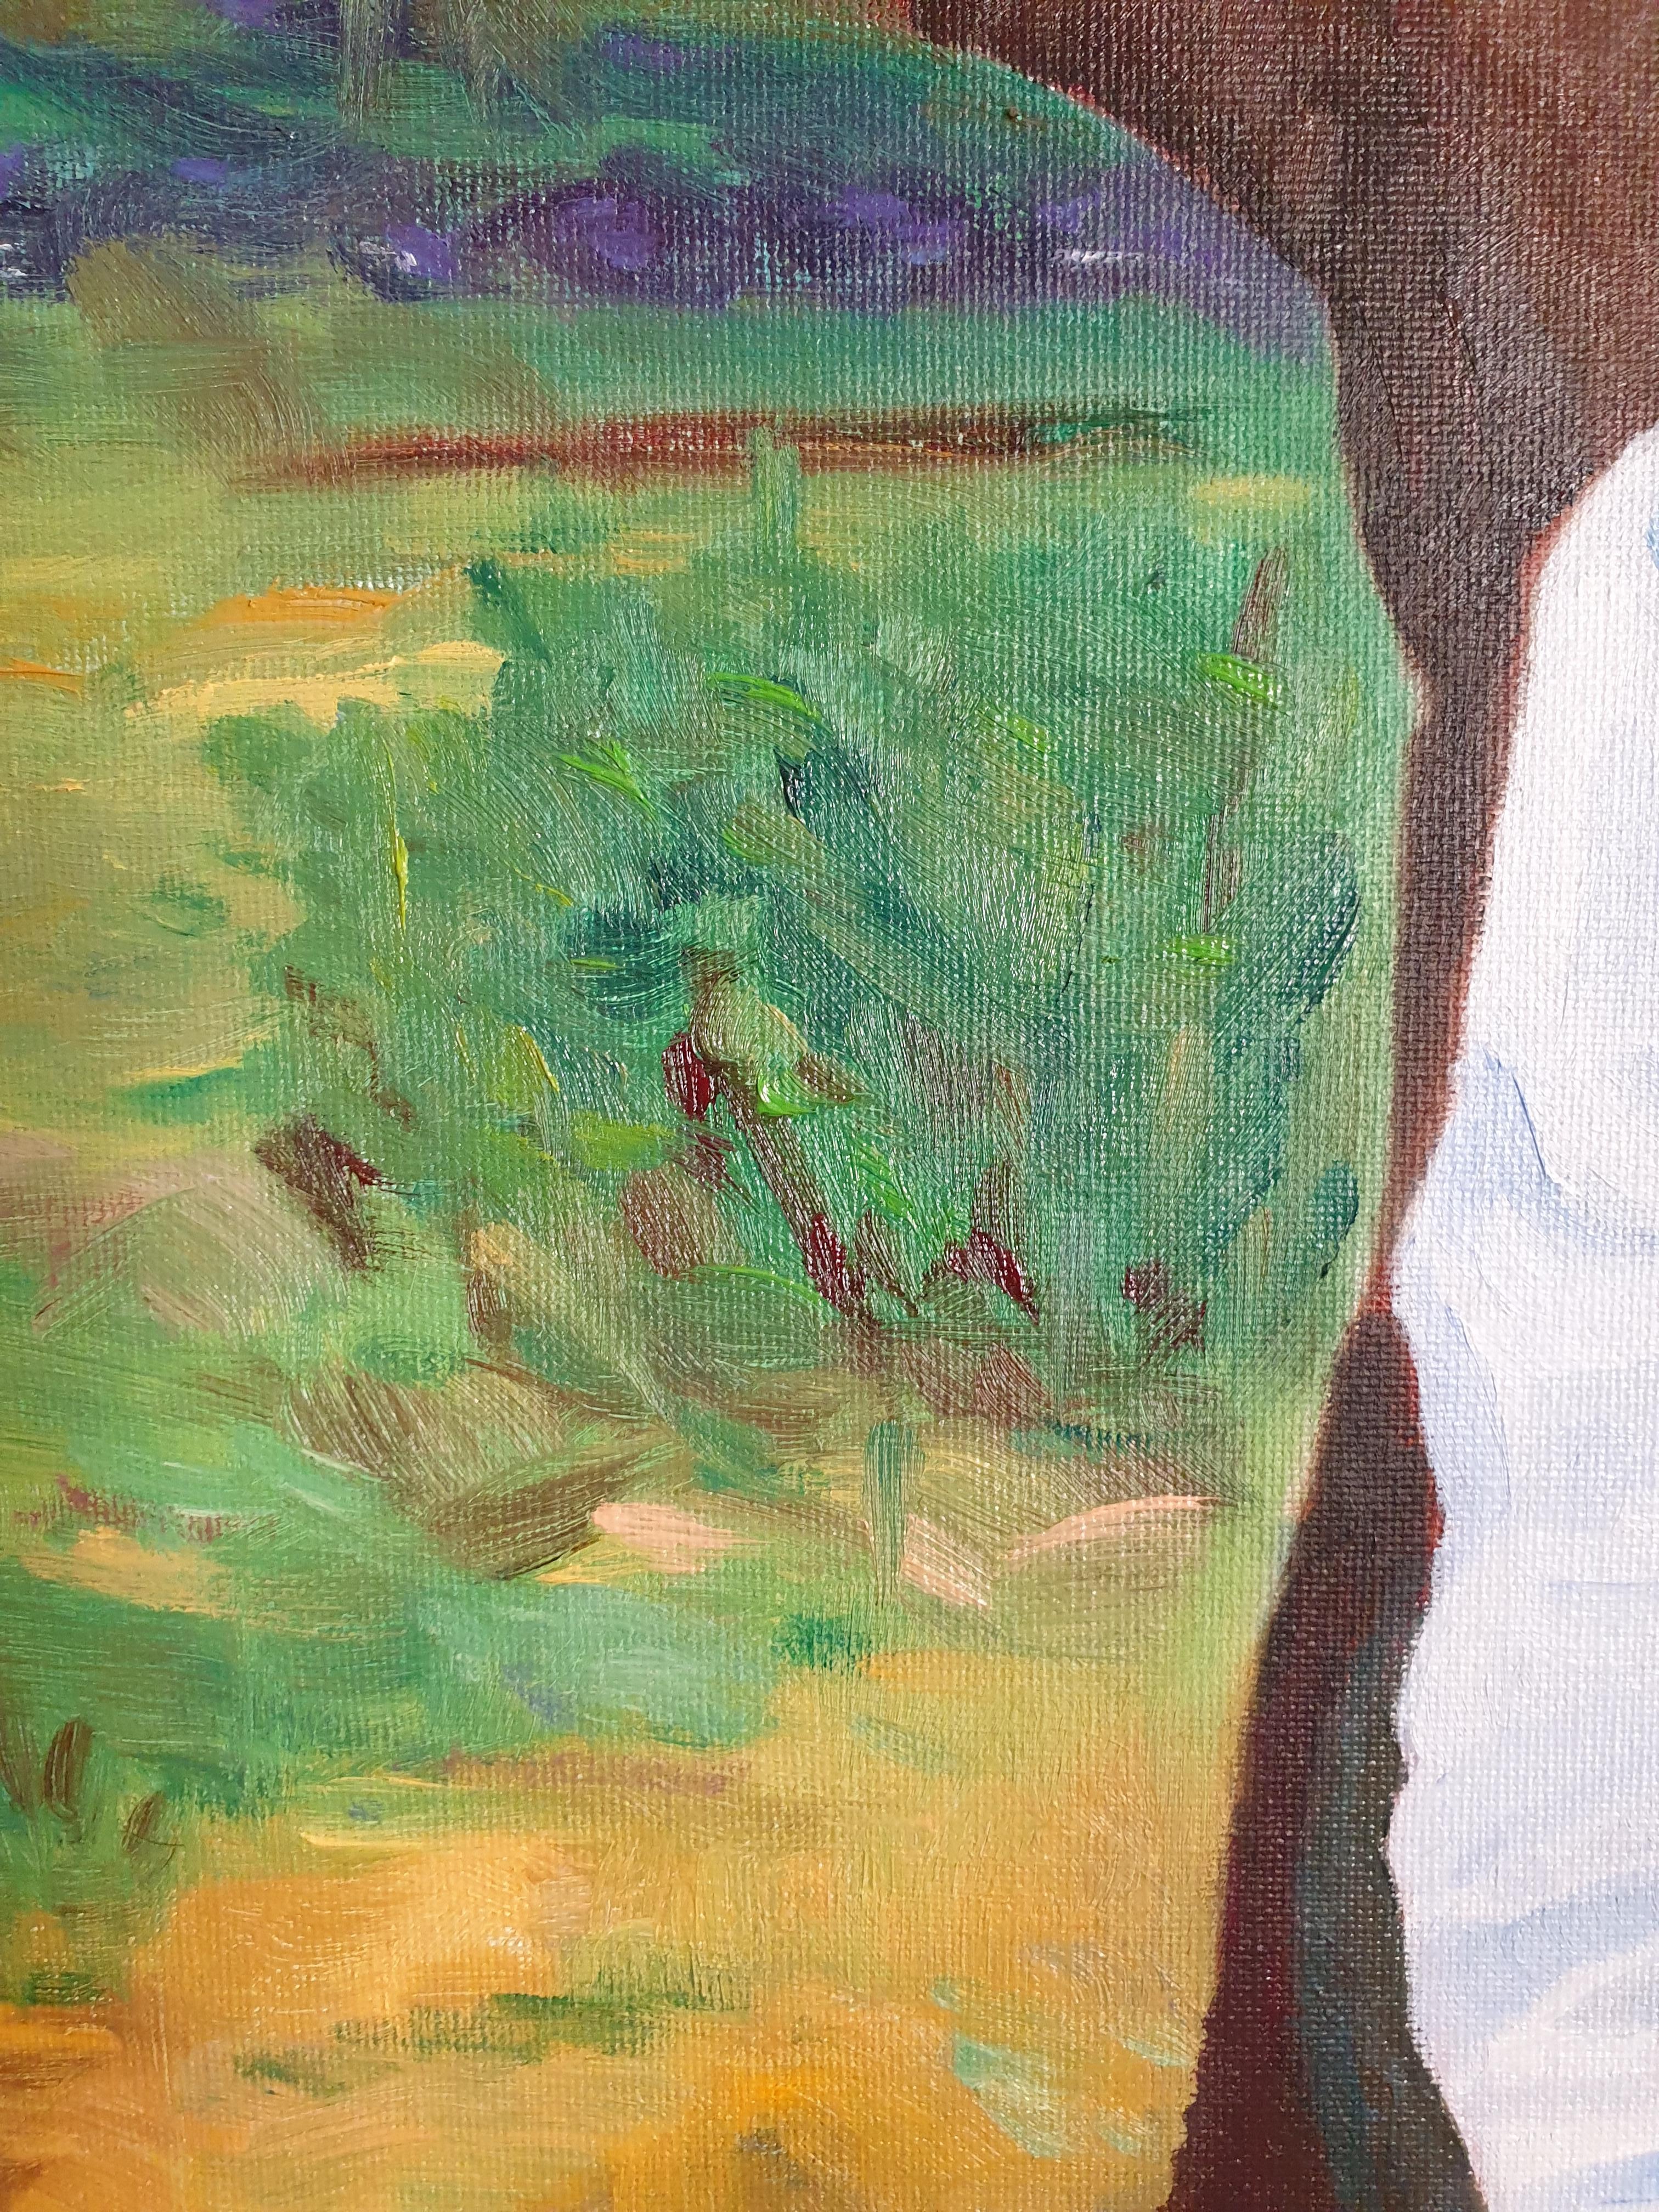 Cora. Contemporary Portrait in Oil on Linen Covered Board. For Sale 5